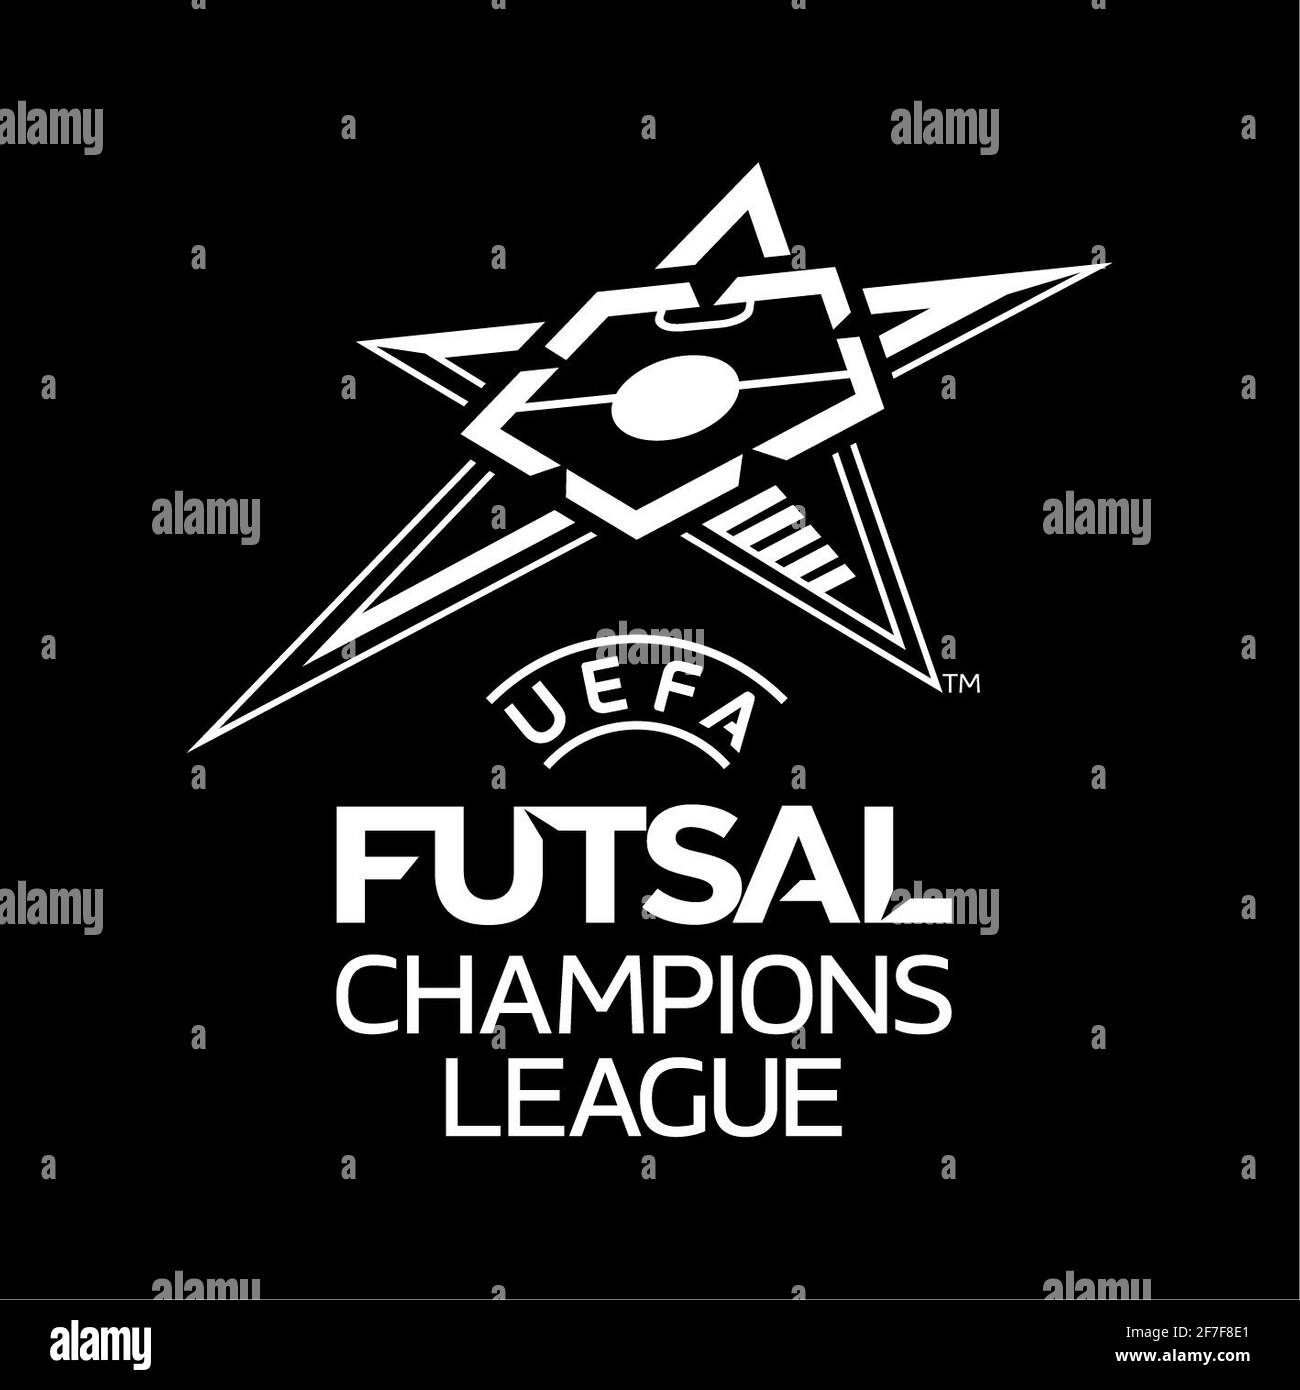 UEFA Futsal Champions League Logo Stock Photo